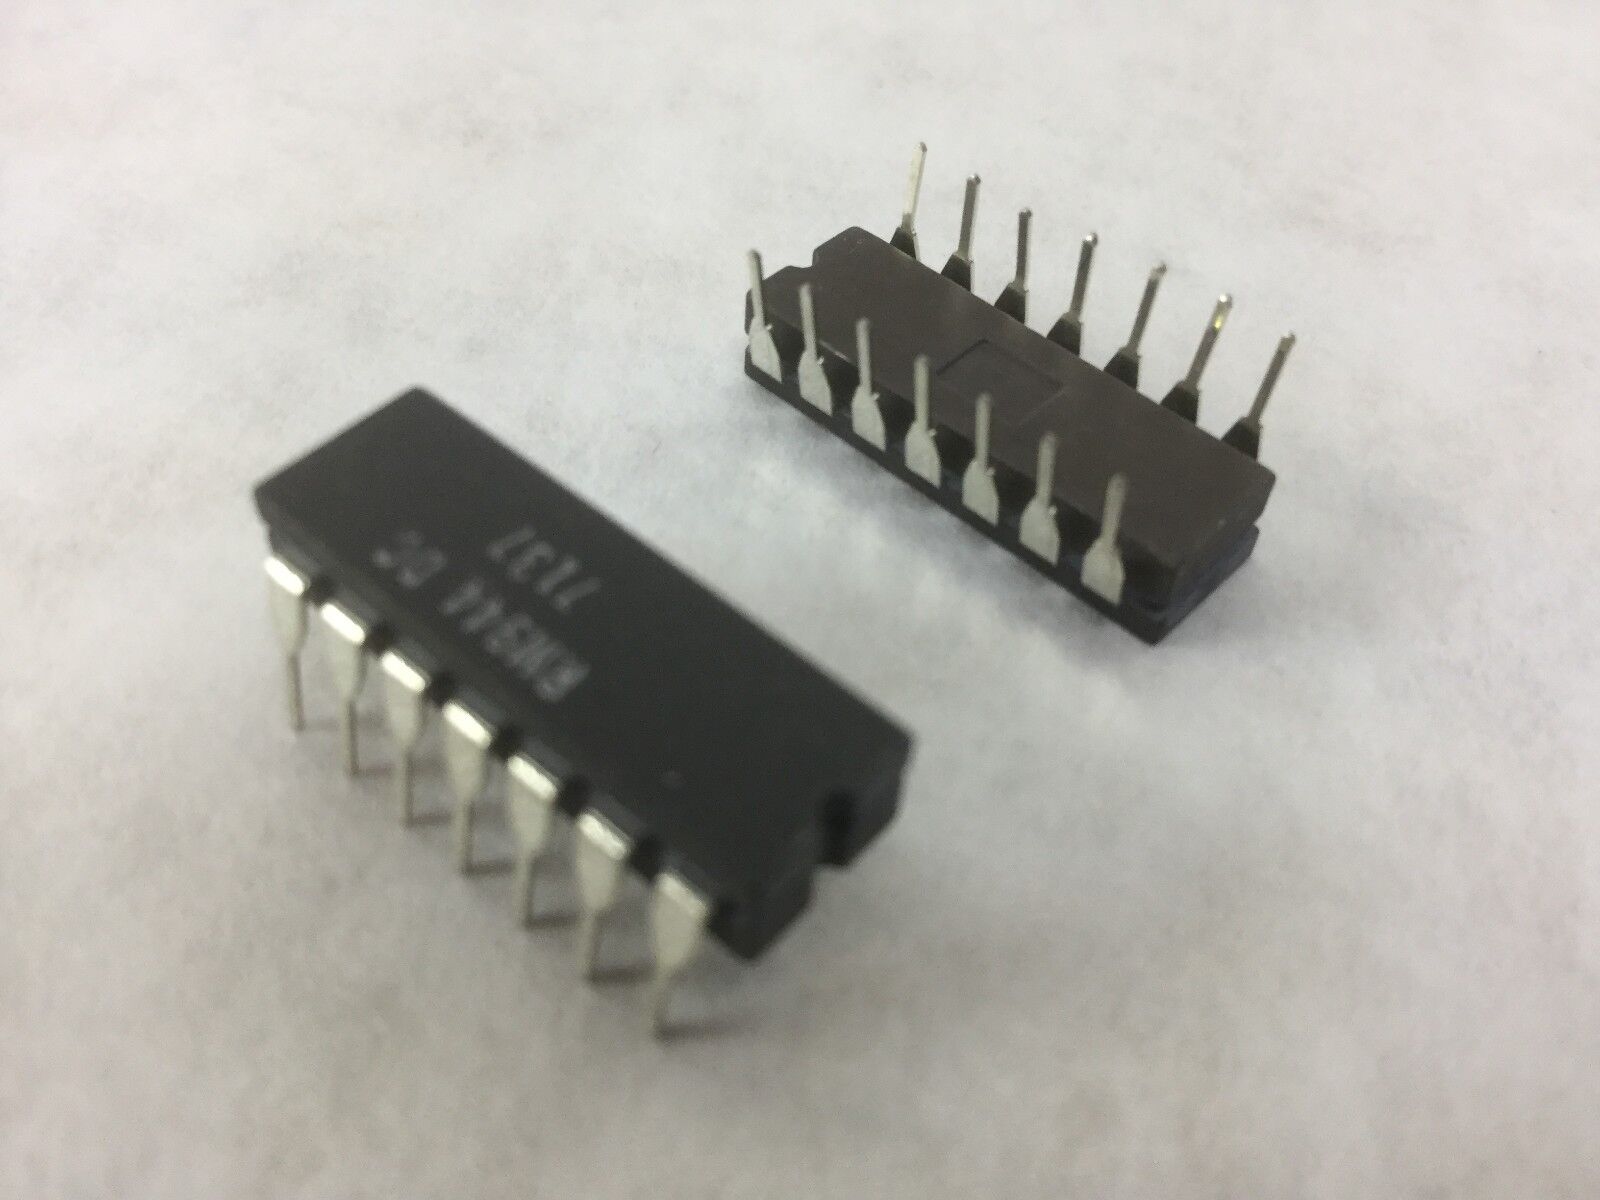 RM944 DC Integrated Circuit  14 Pin  Lot of 9